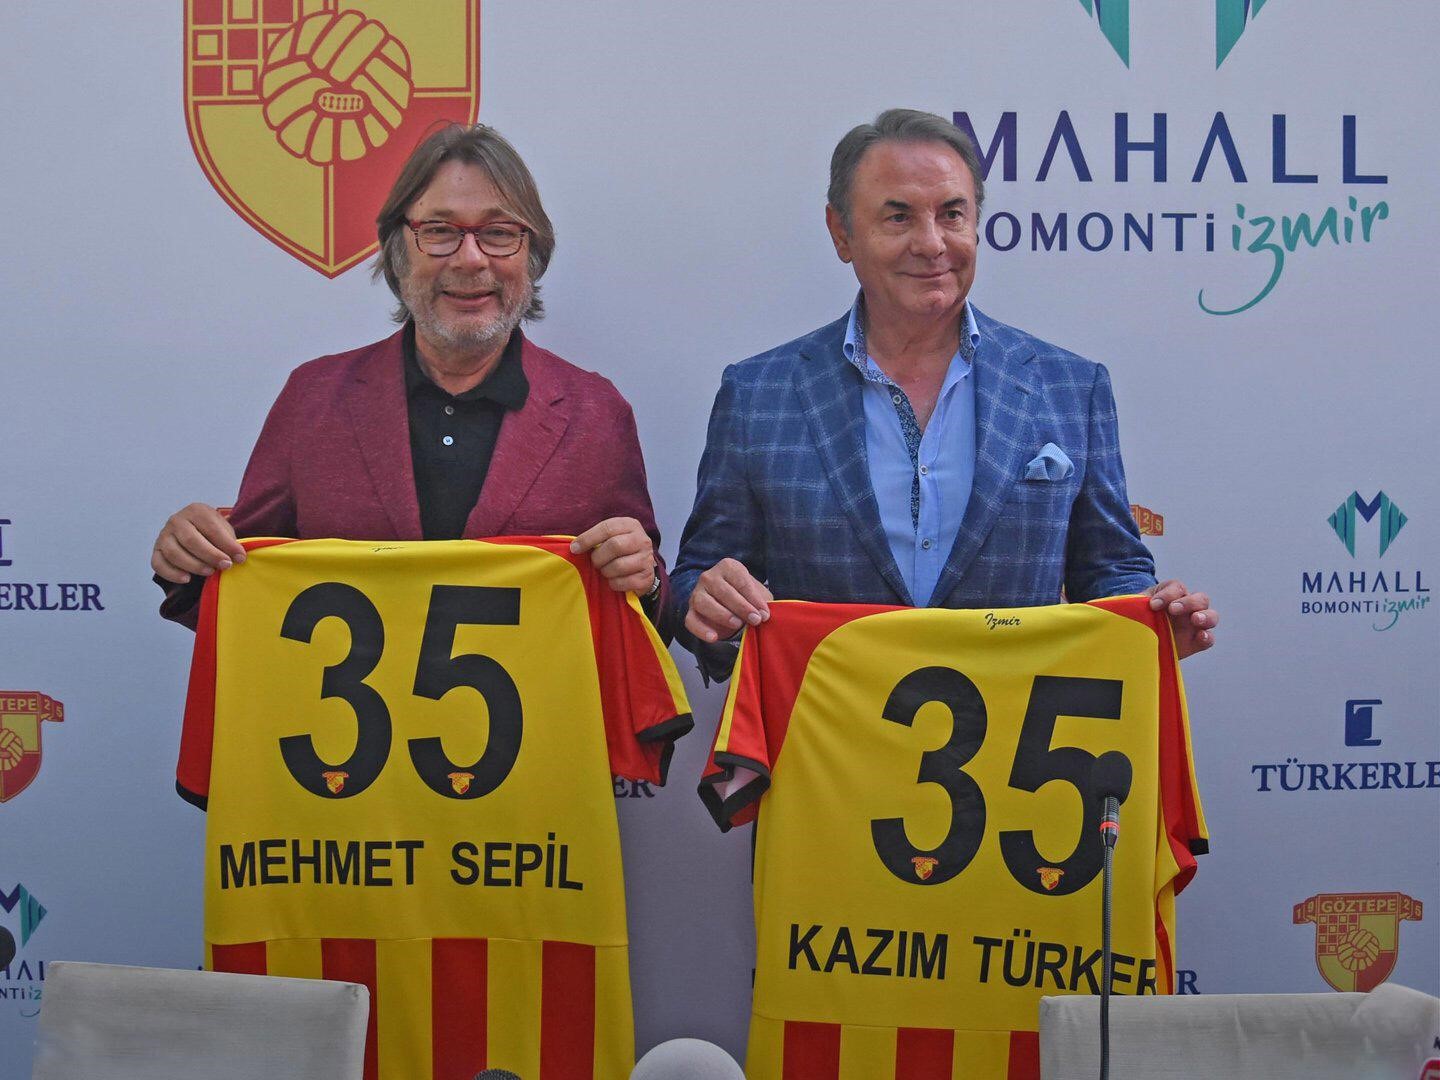 Göztepe's Main Sponsorship Deal With Türkerler Holding Is Already Signed Off